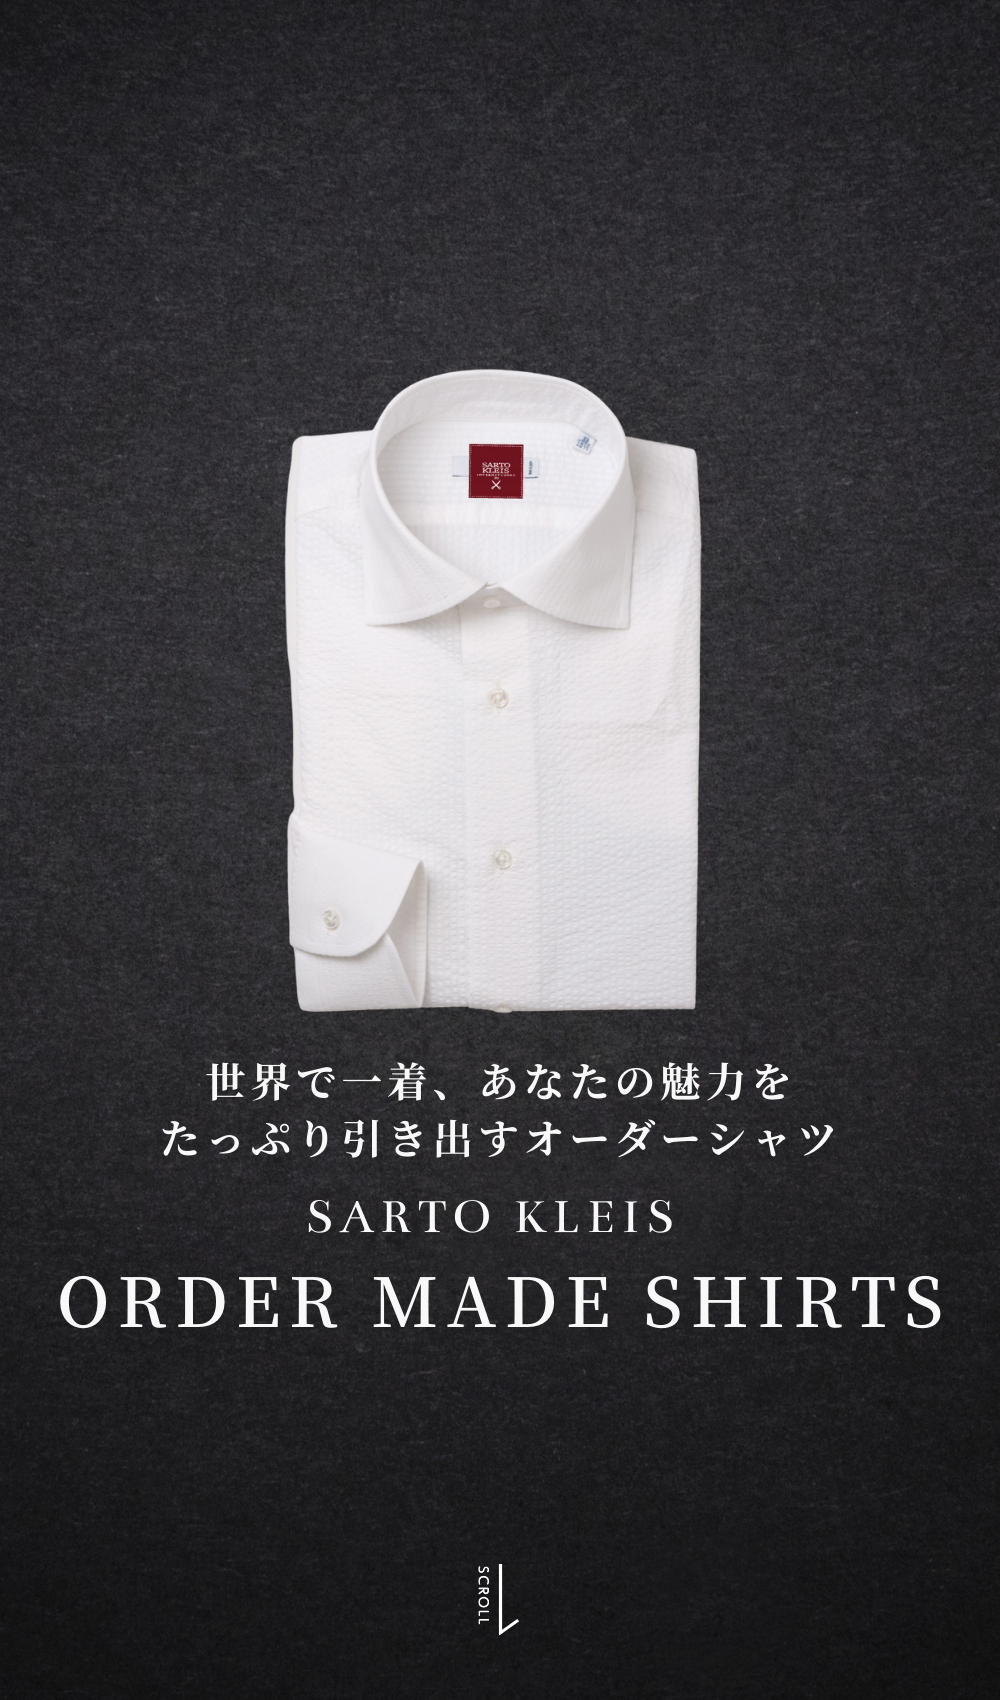 order shirts sp 1 - オーダーシャツ